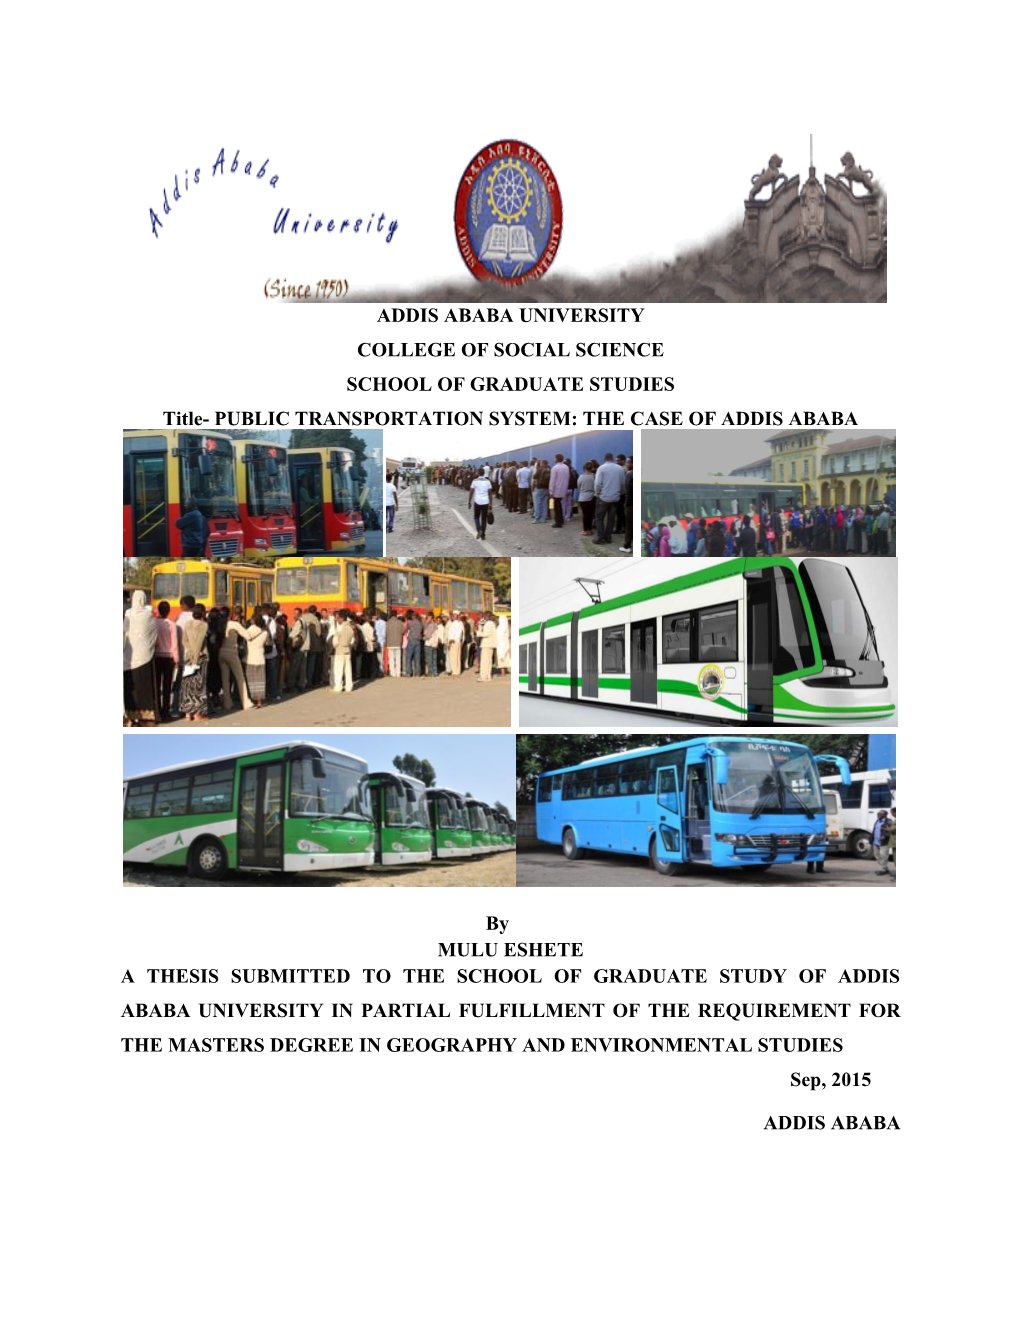 Public Transportation System: the Case of Addis Ababa